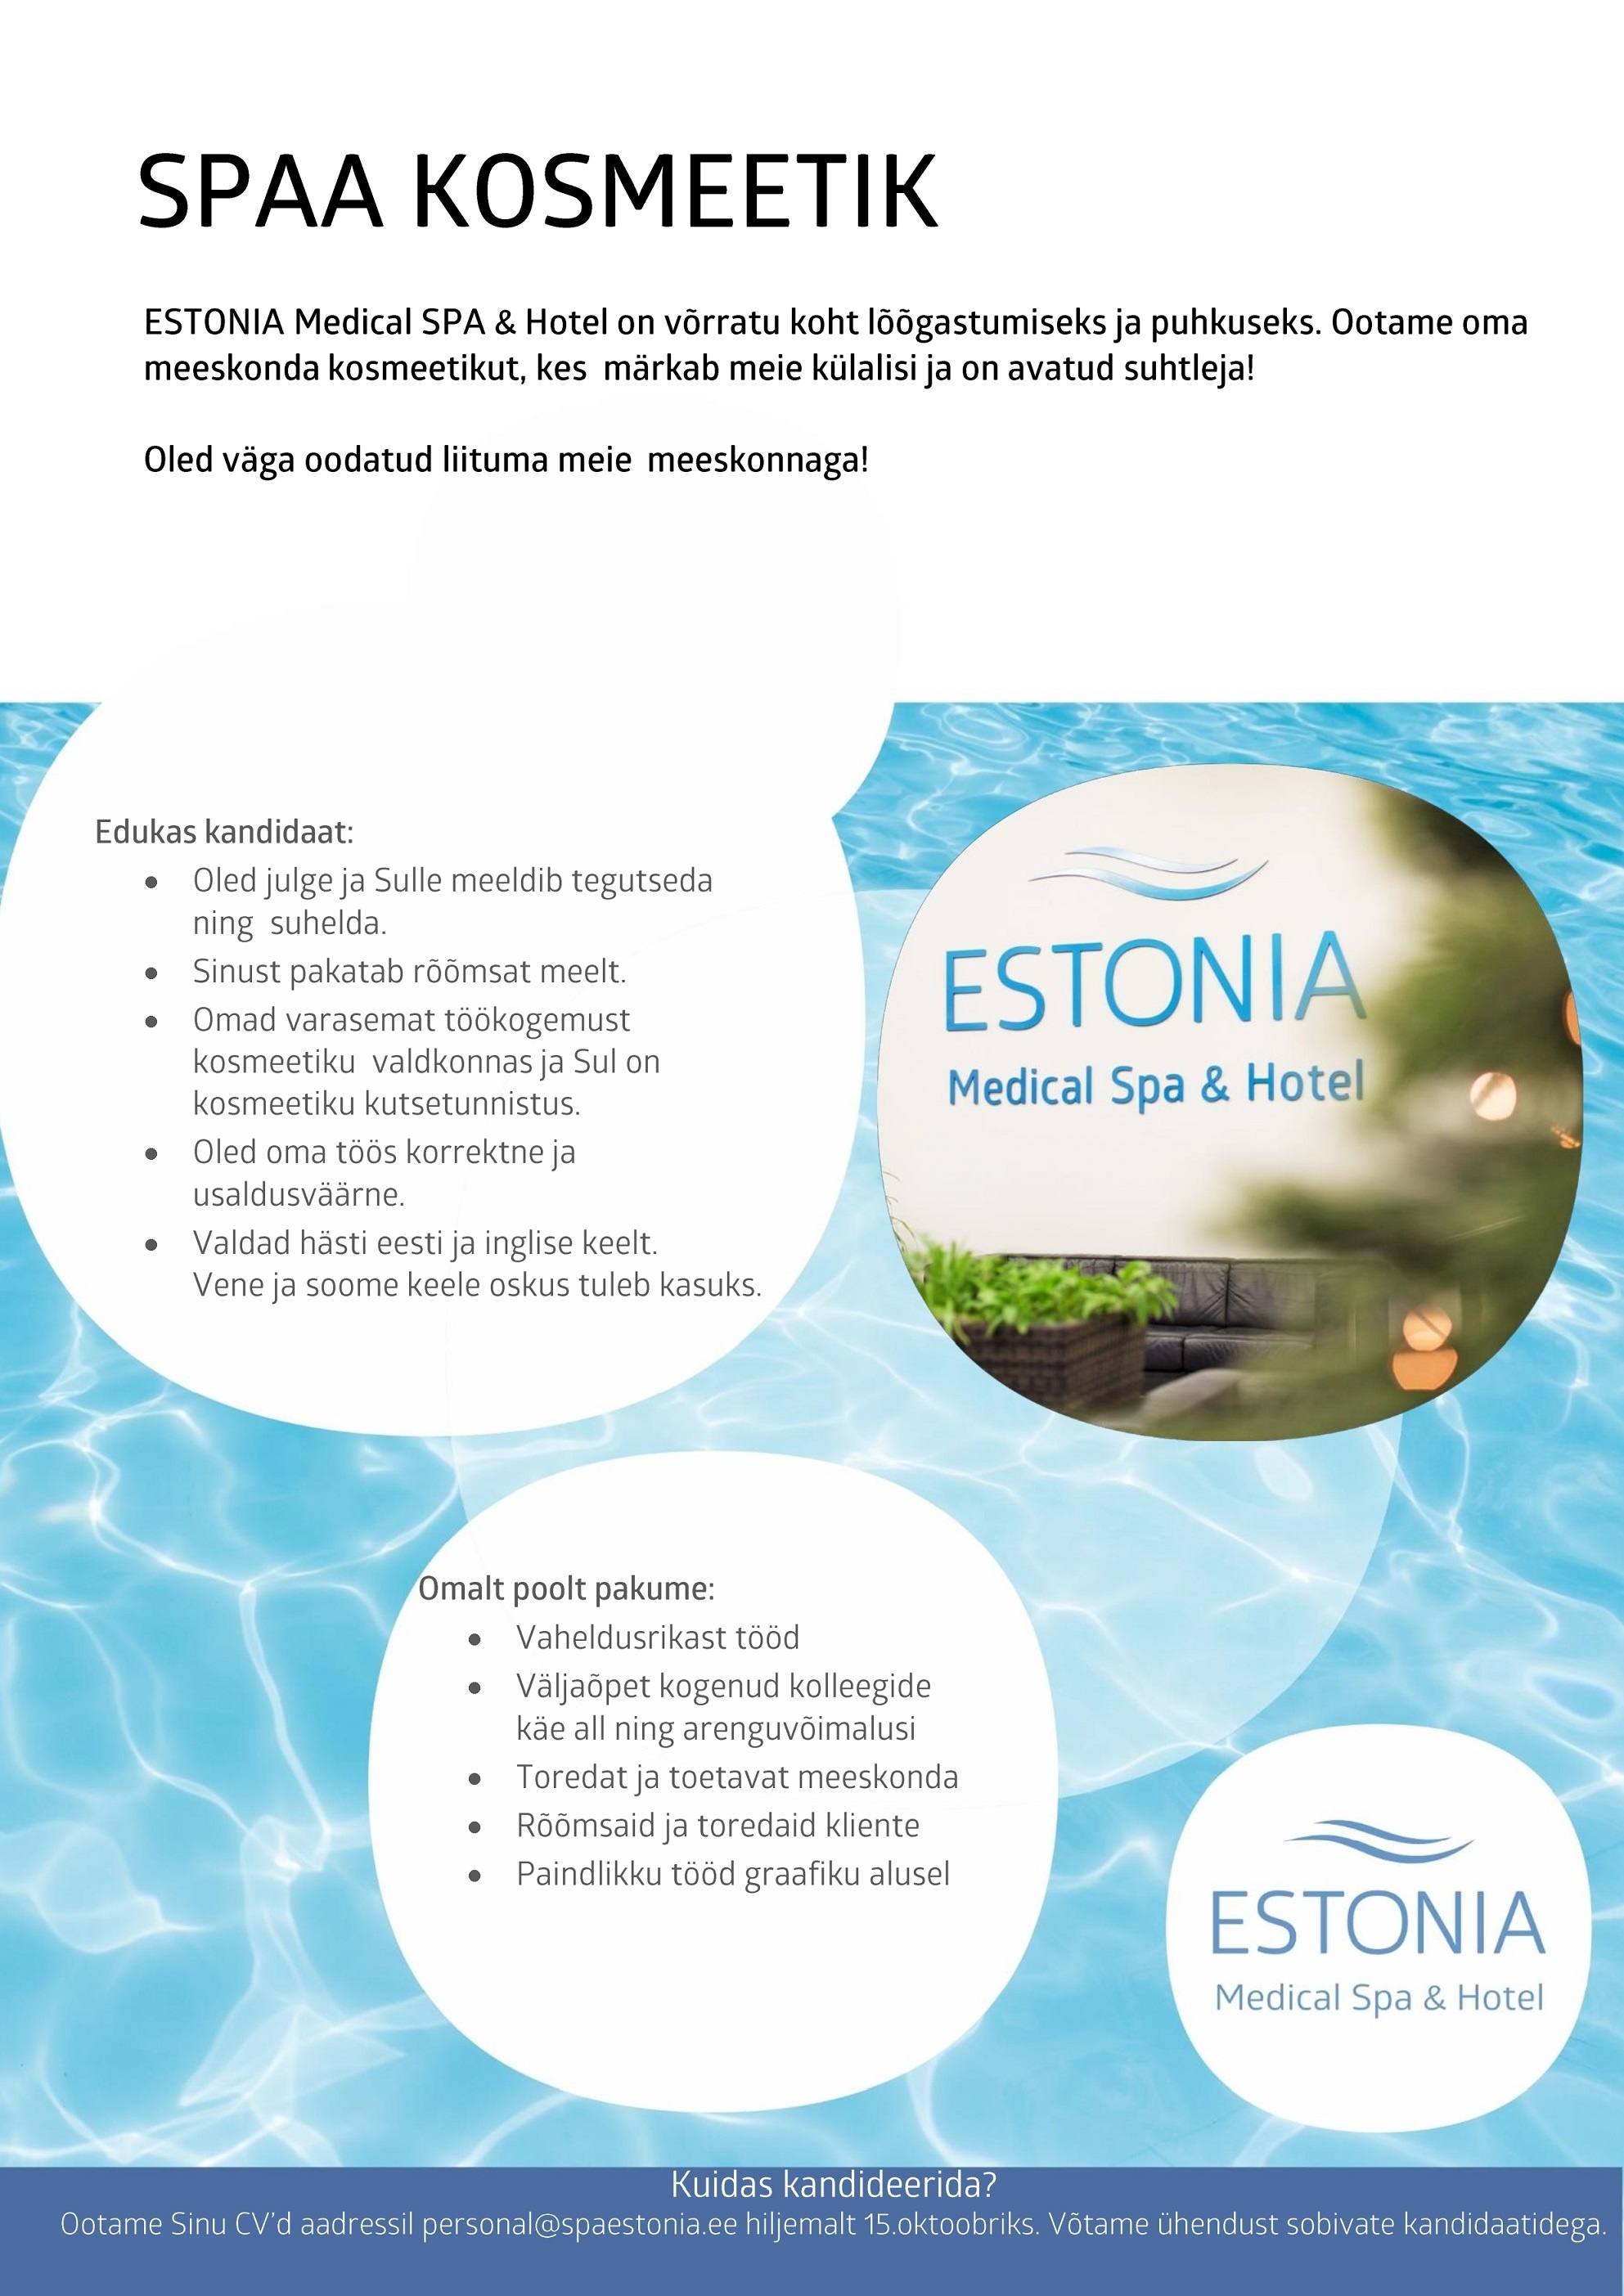 Estonia Spa Hotels AS Kosmeetik Estonia Medical Spa&Hotel´is